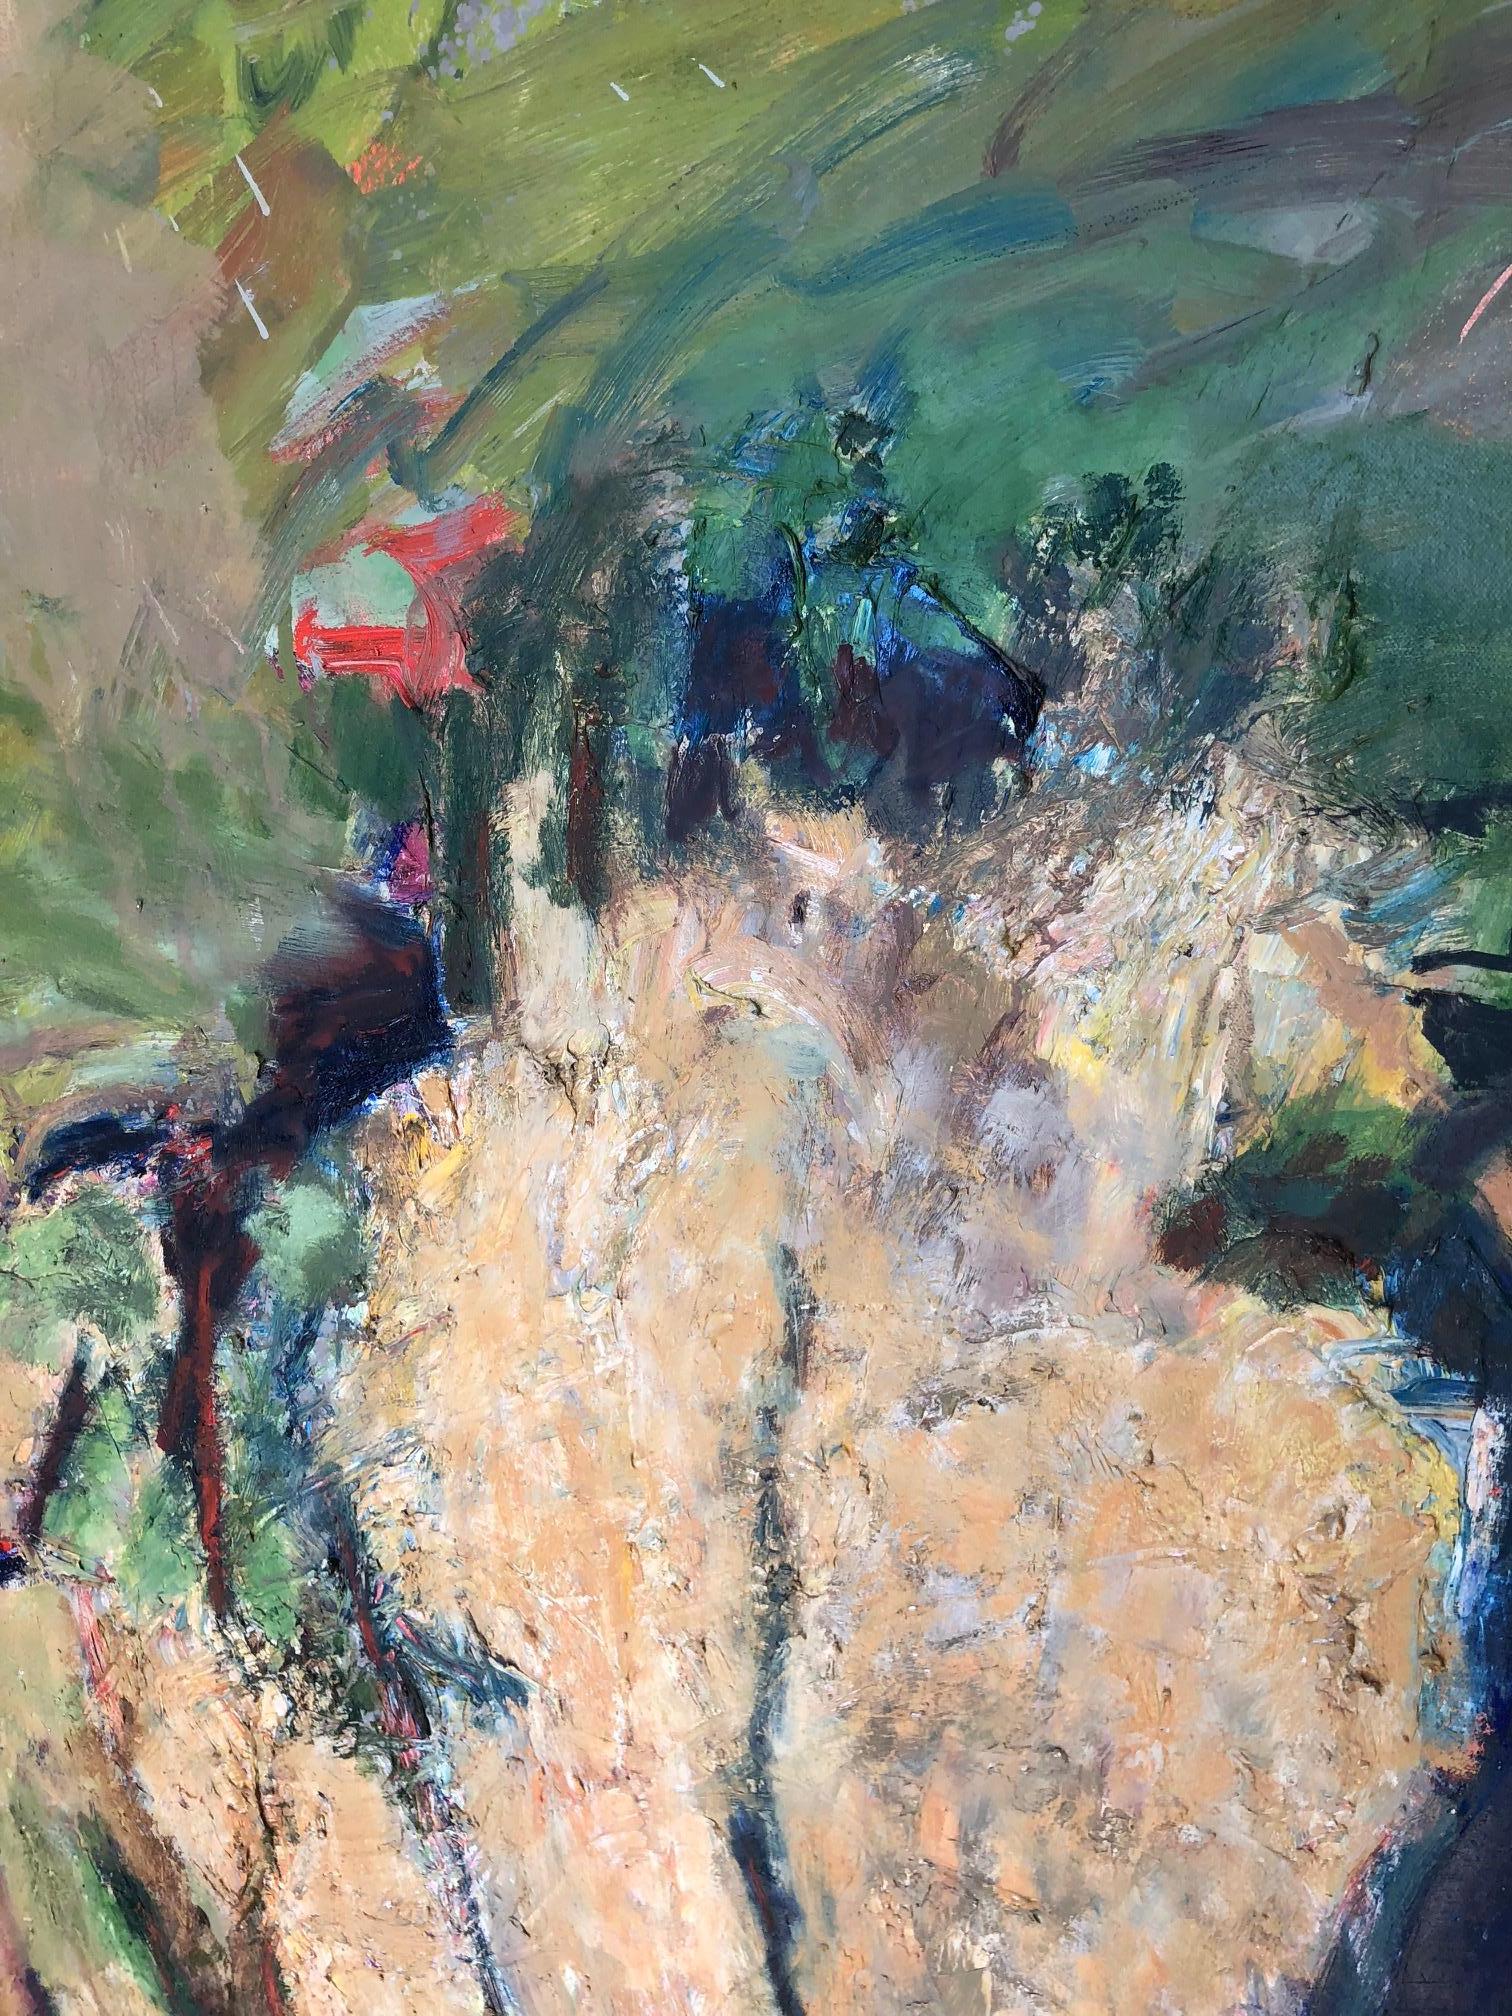 Desert Landscape / oil on canvas - Painting by John Goodman